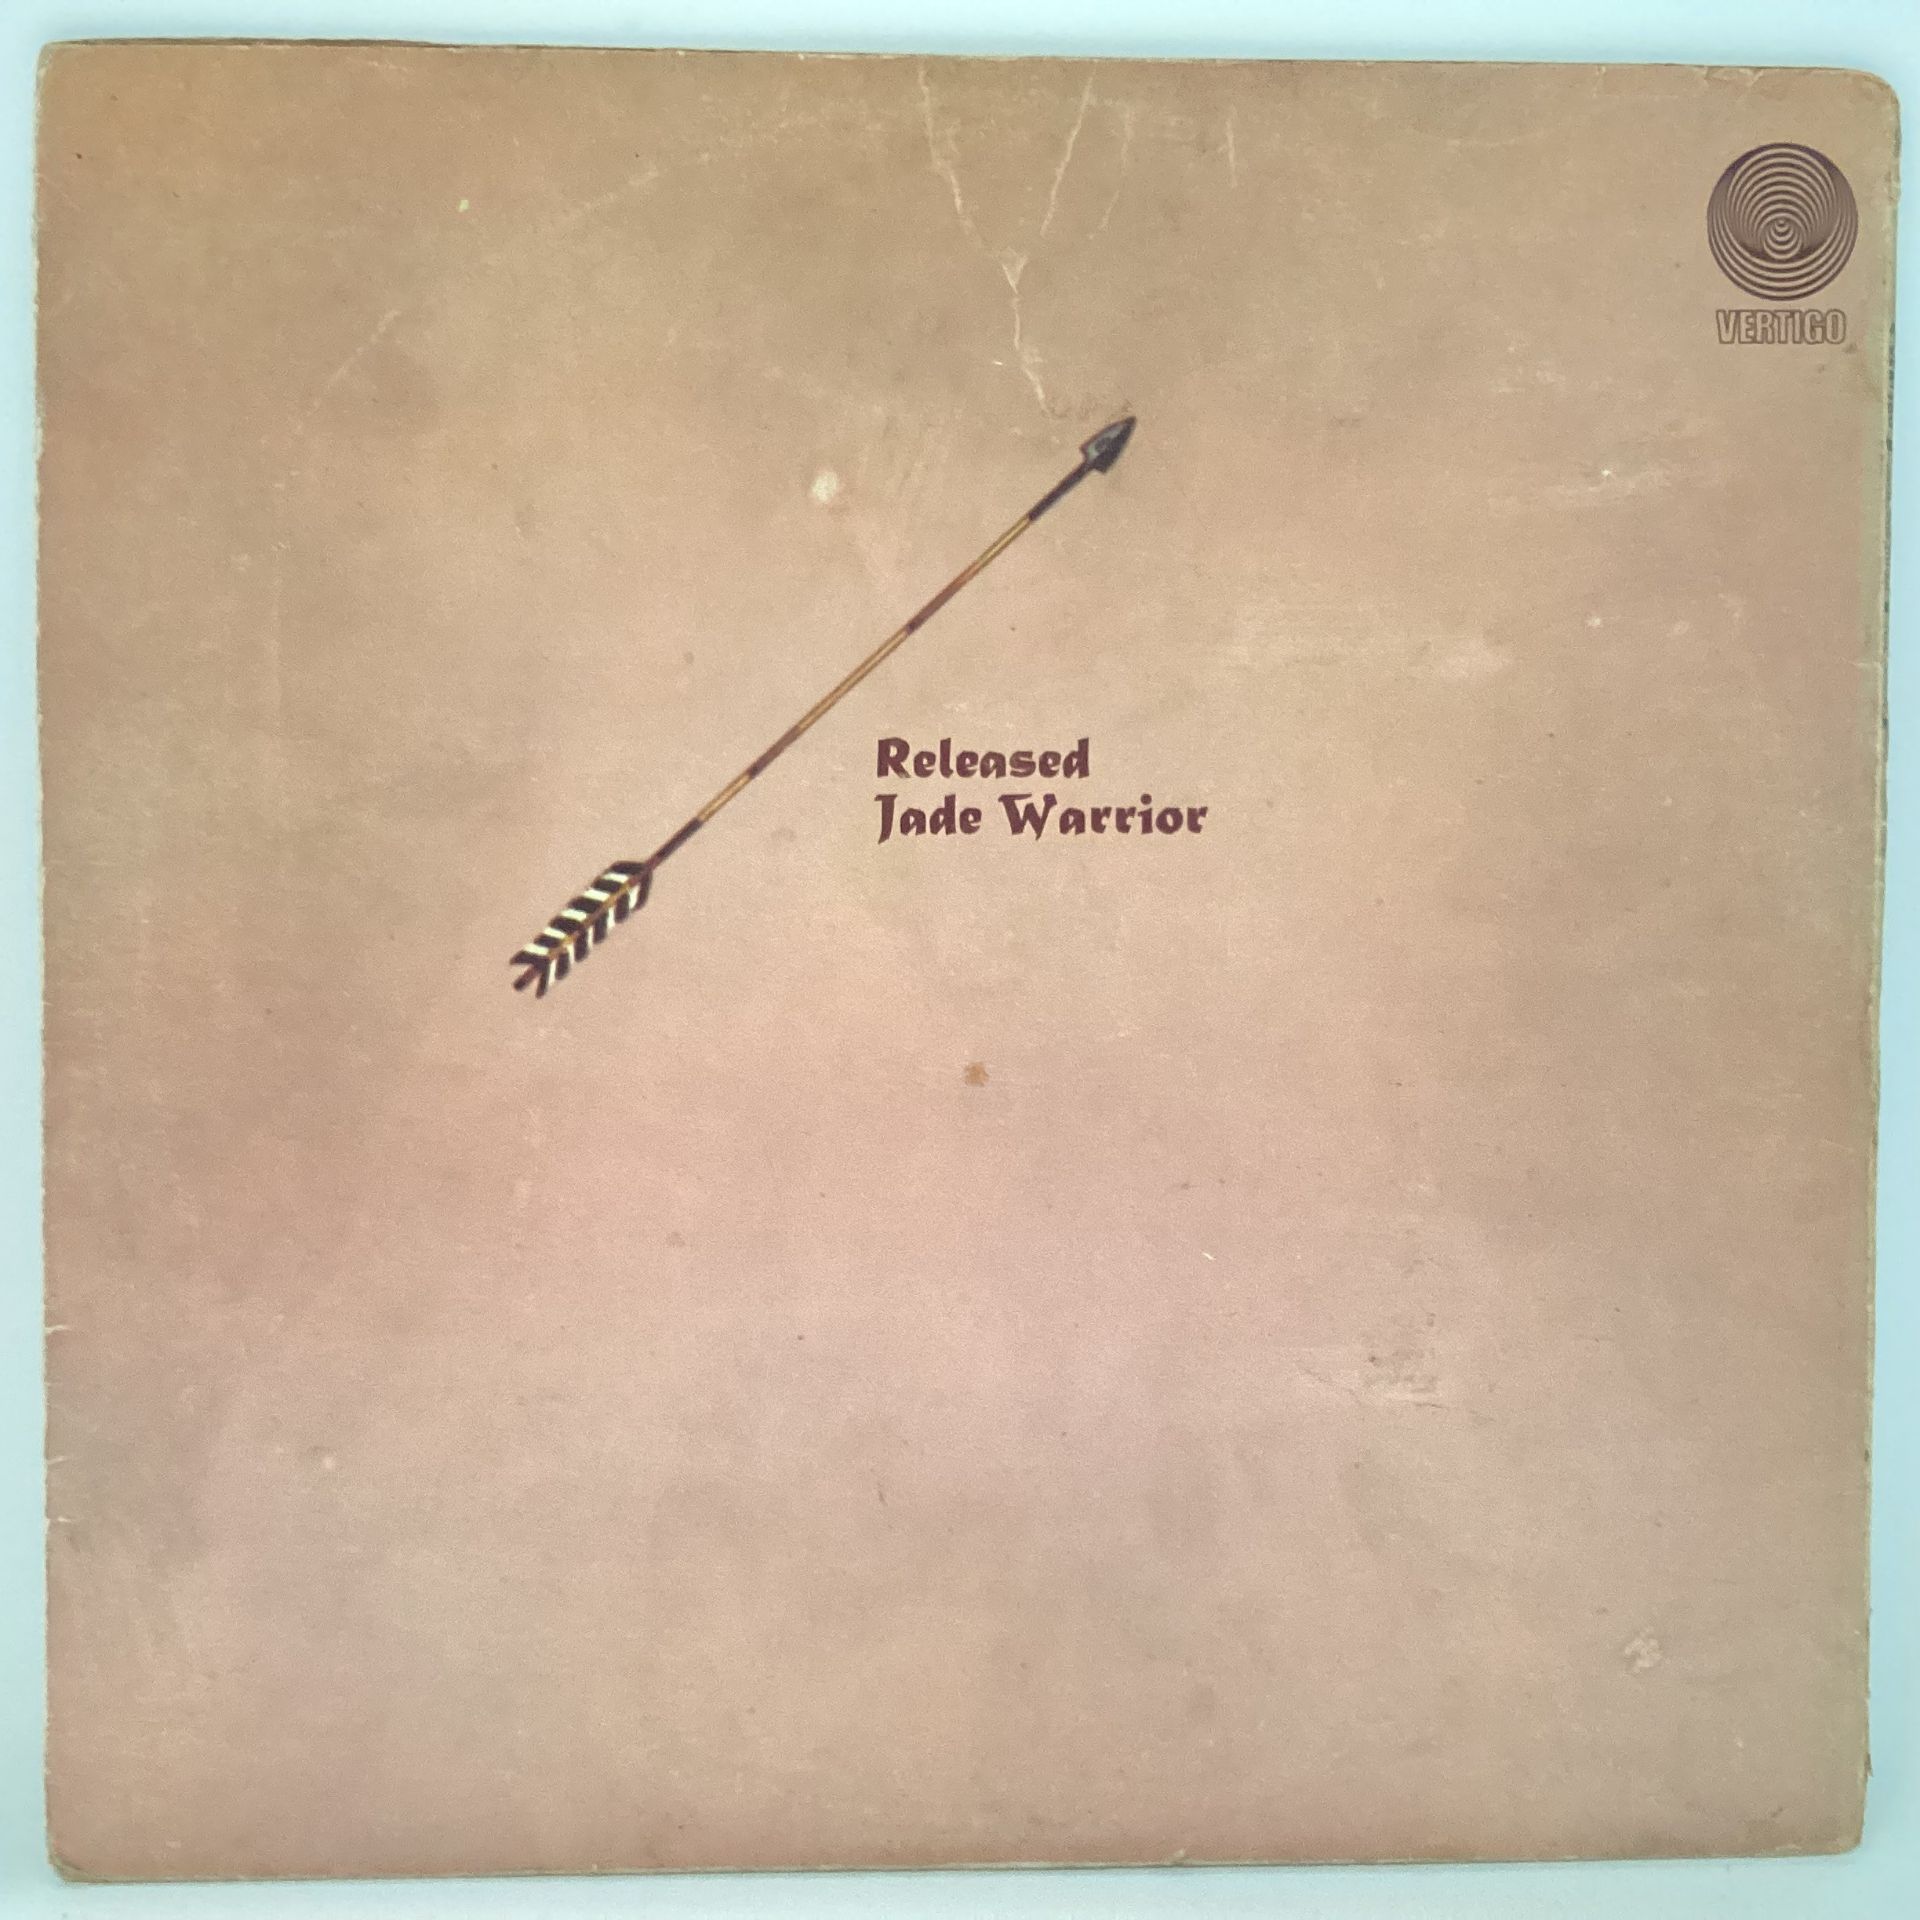 JADE WARRIOR VINYL VERTIGO SWIRL ALBUM ‘RELEASED’. This Ex condition album is from 1971 and on the